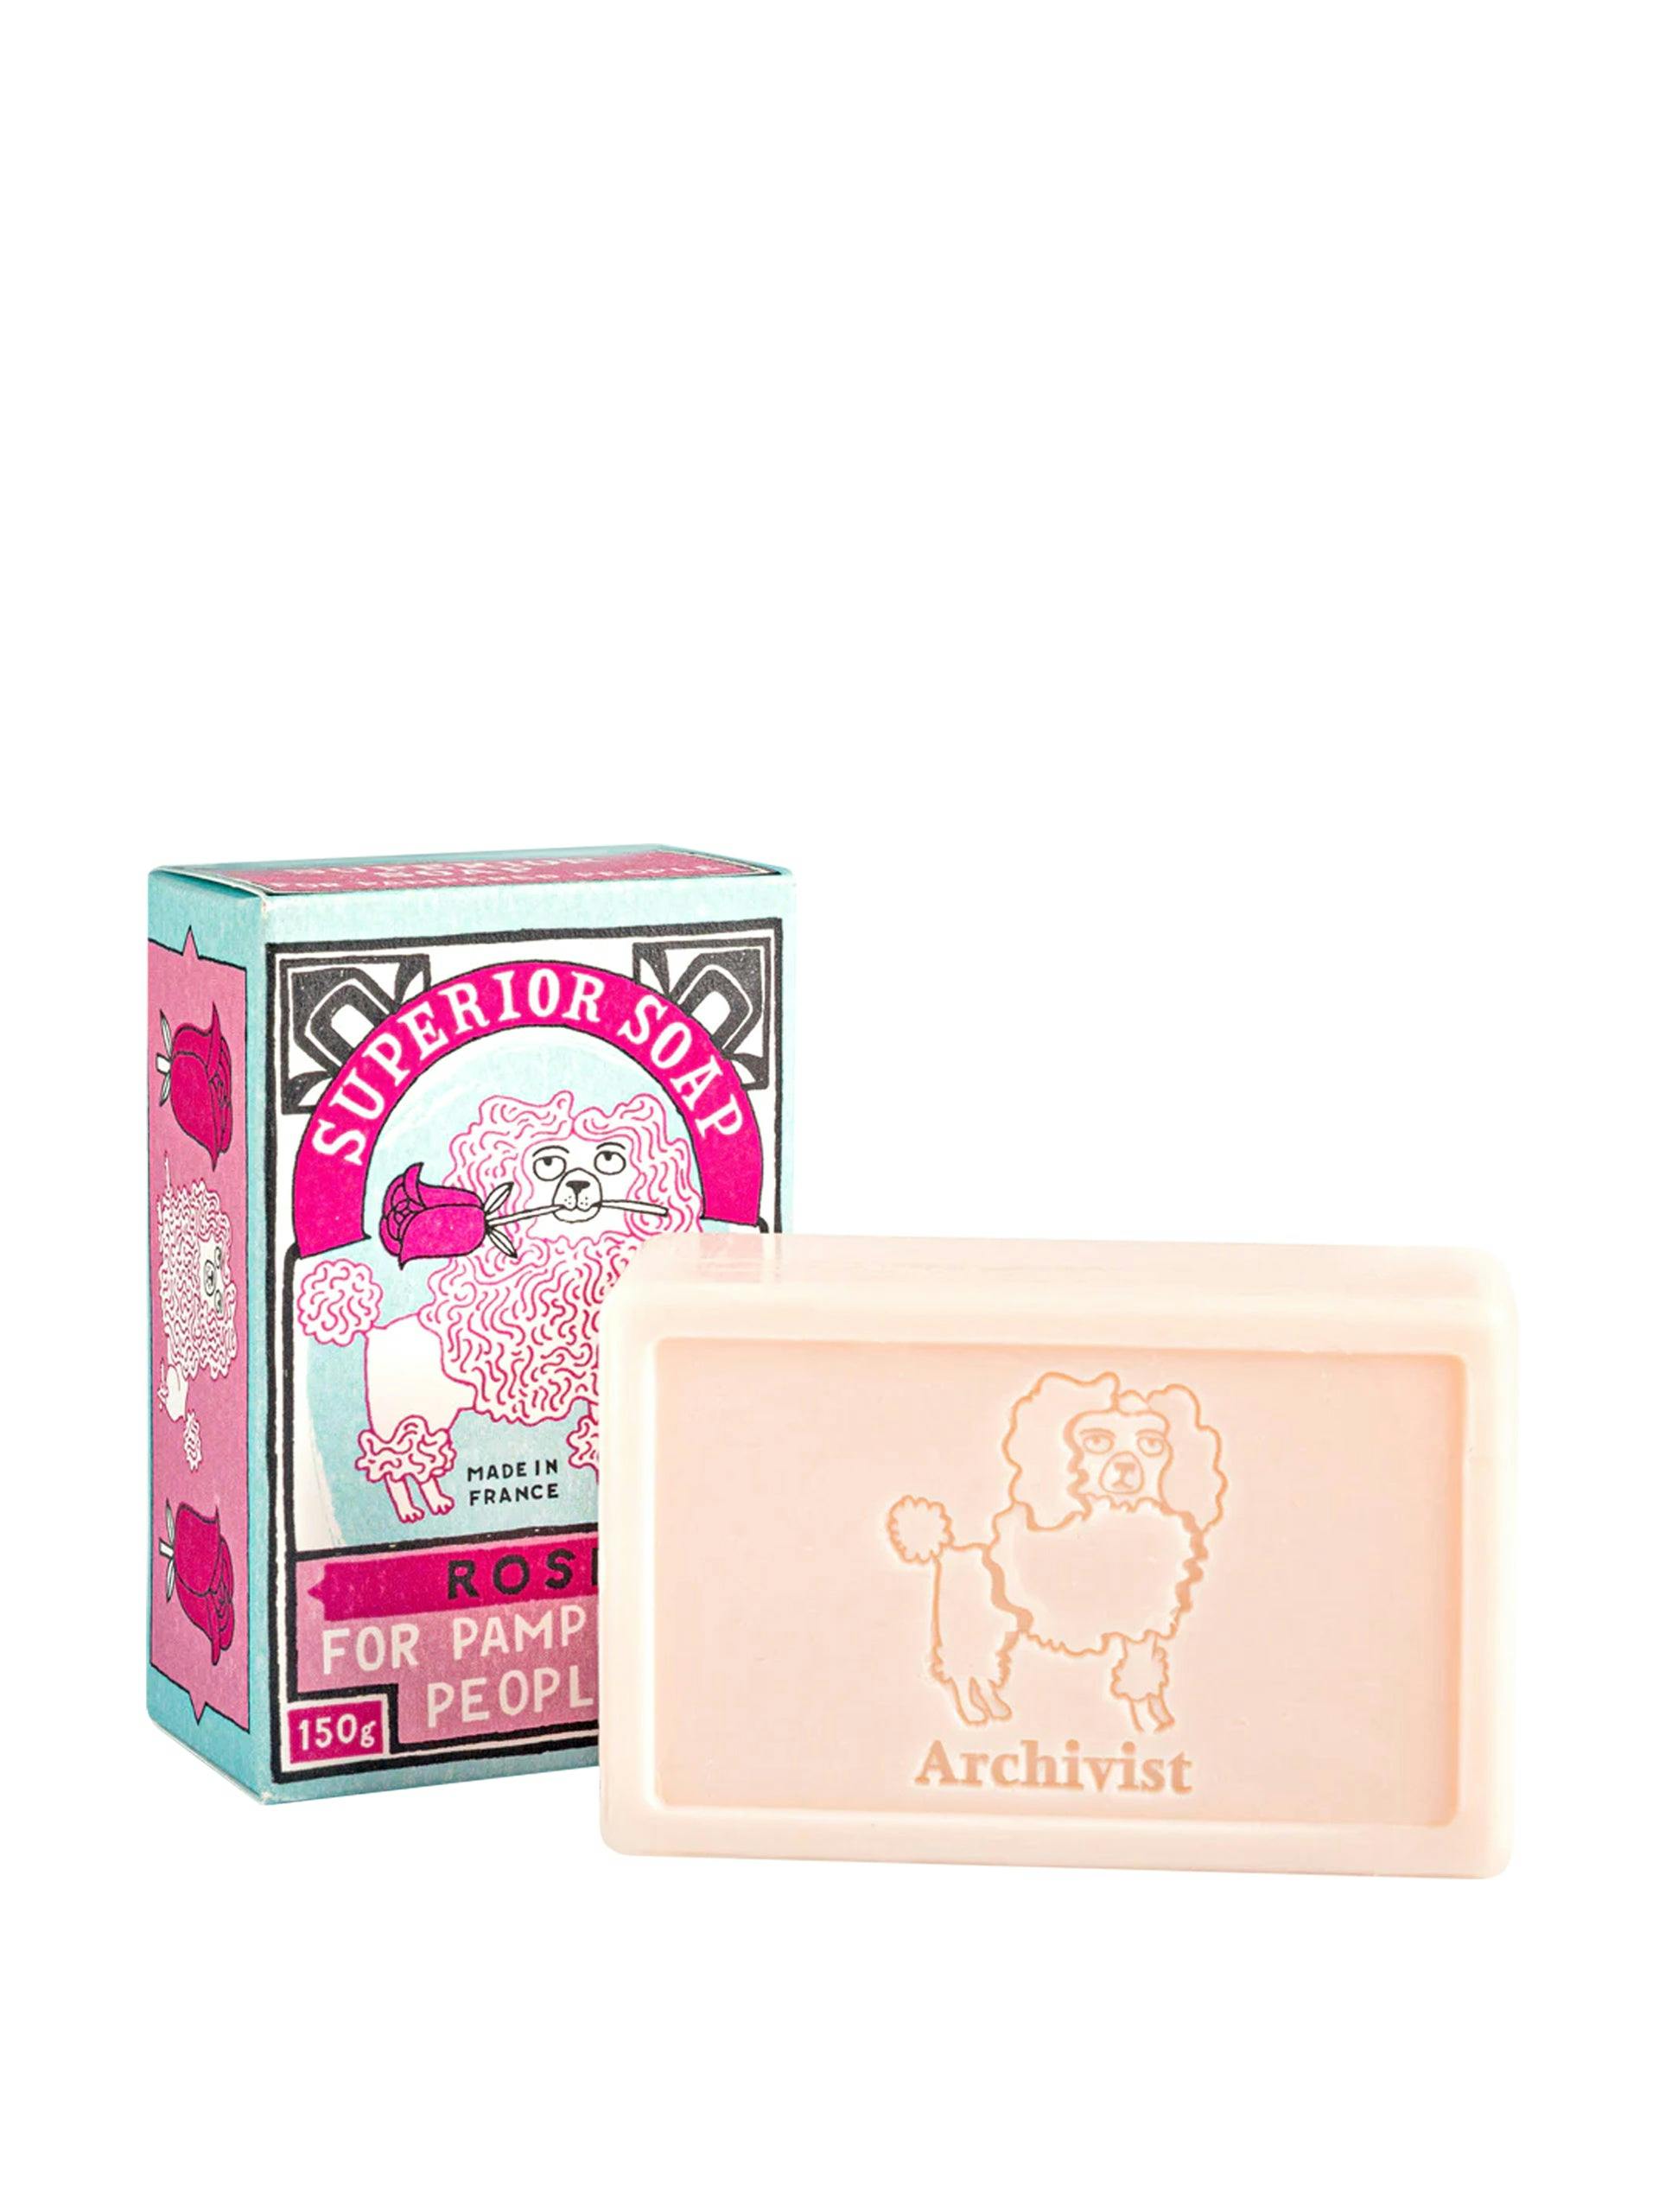 Superior rose hand soap